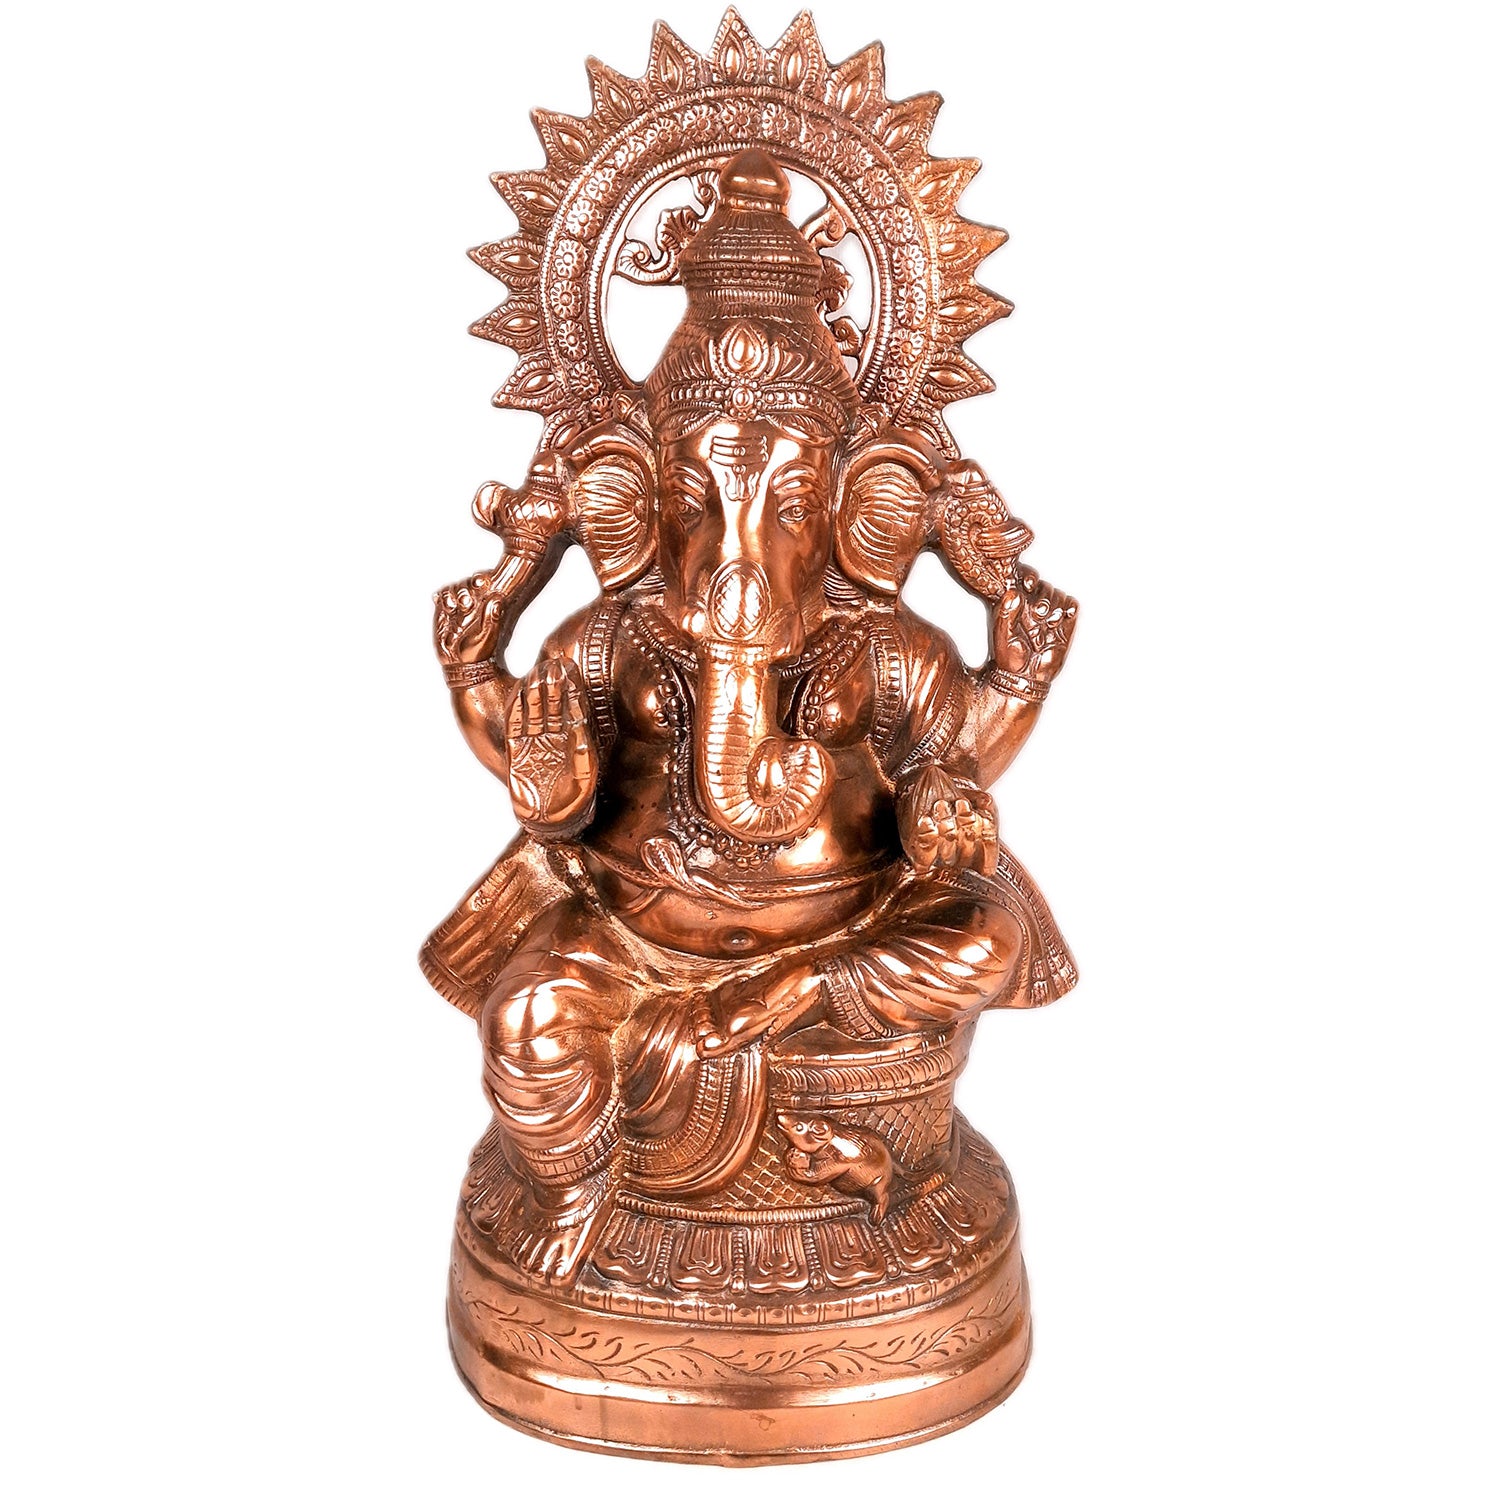 Ganesh Idol | Lord Ganesha Statue Murti |Religoius & Spiritual Art - For Puja, Home & Entrance Living Room Decor & Gift - 21 Inch - Apkamart